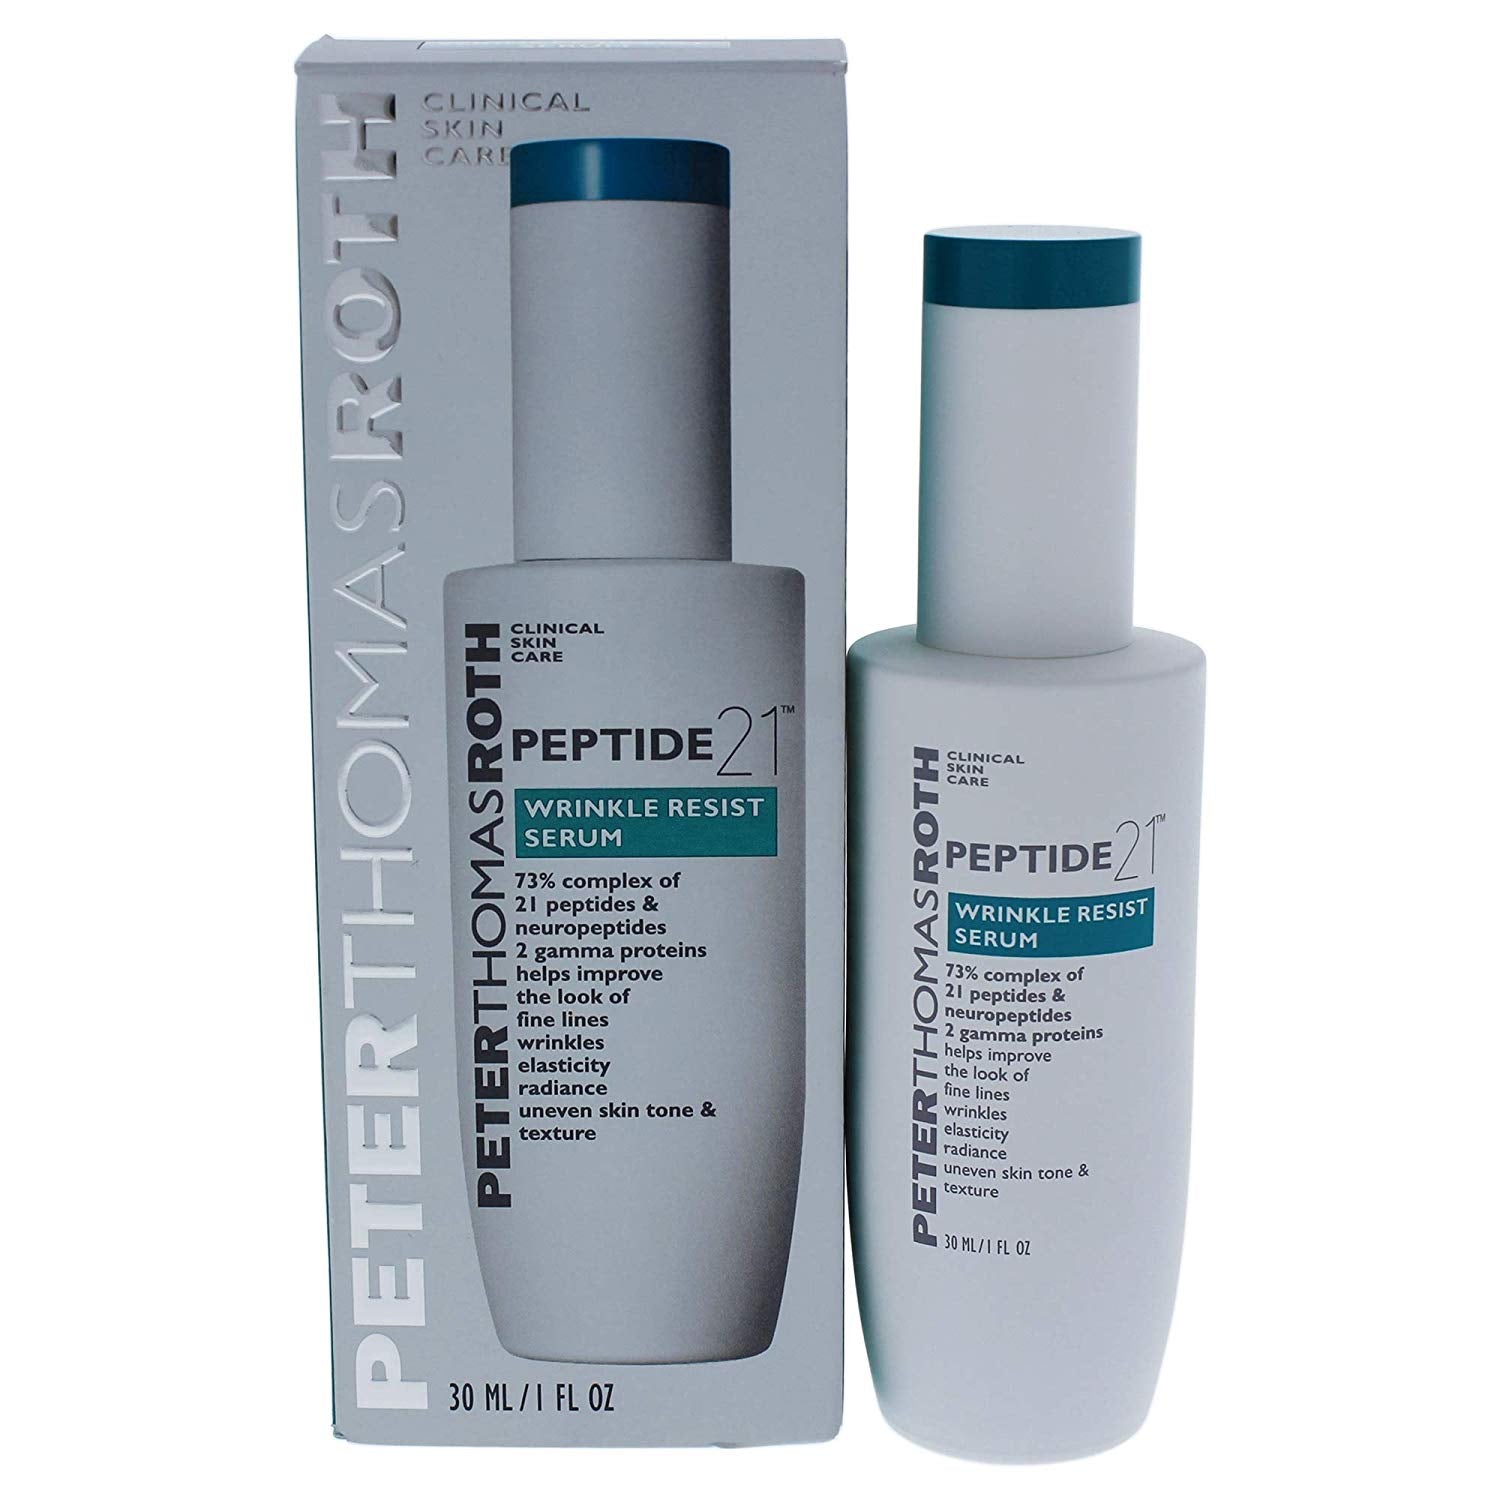 Peter Thomas Roth Peptide 21 Wrinkle Resist Serum 1 oz.